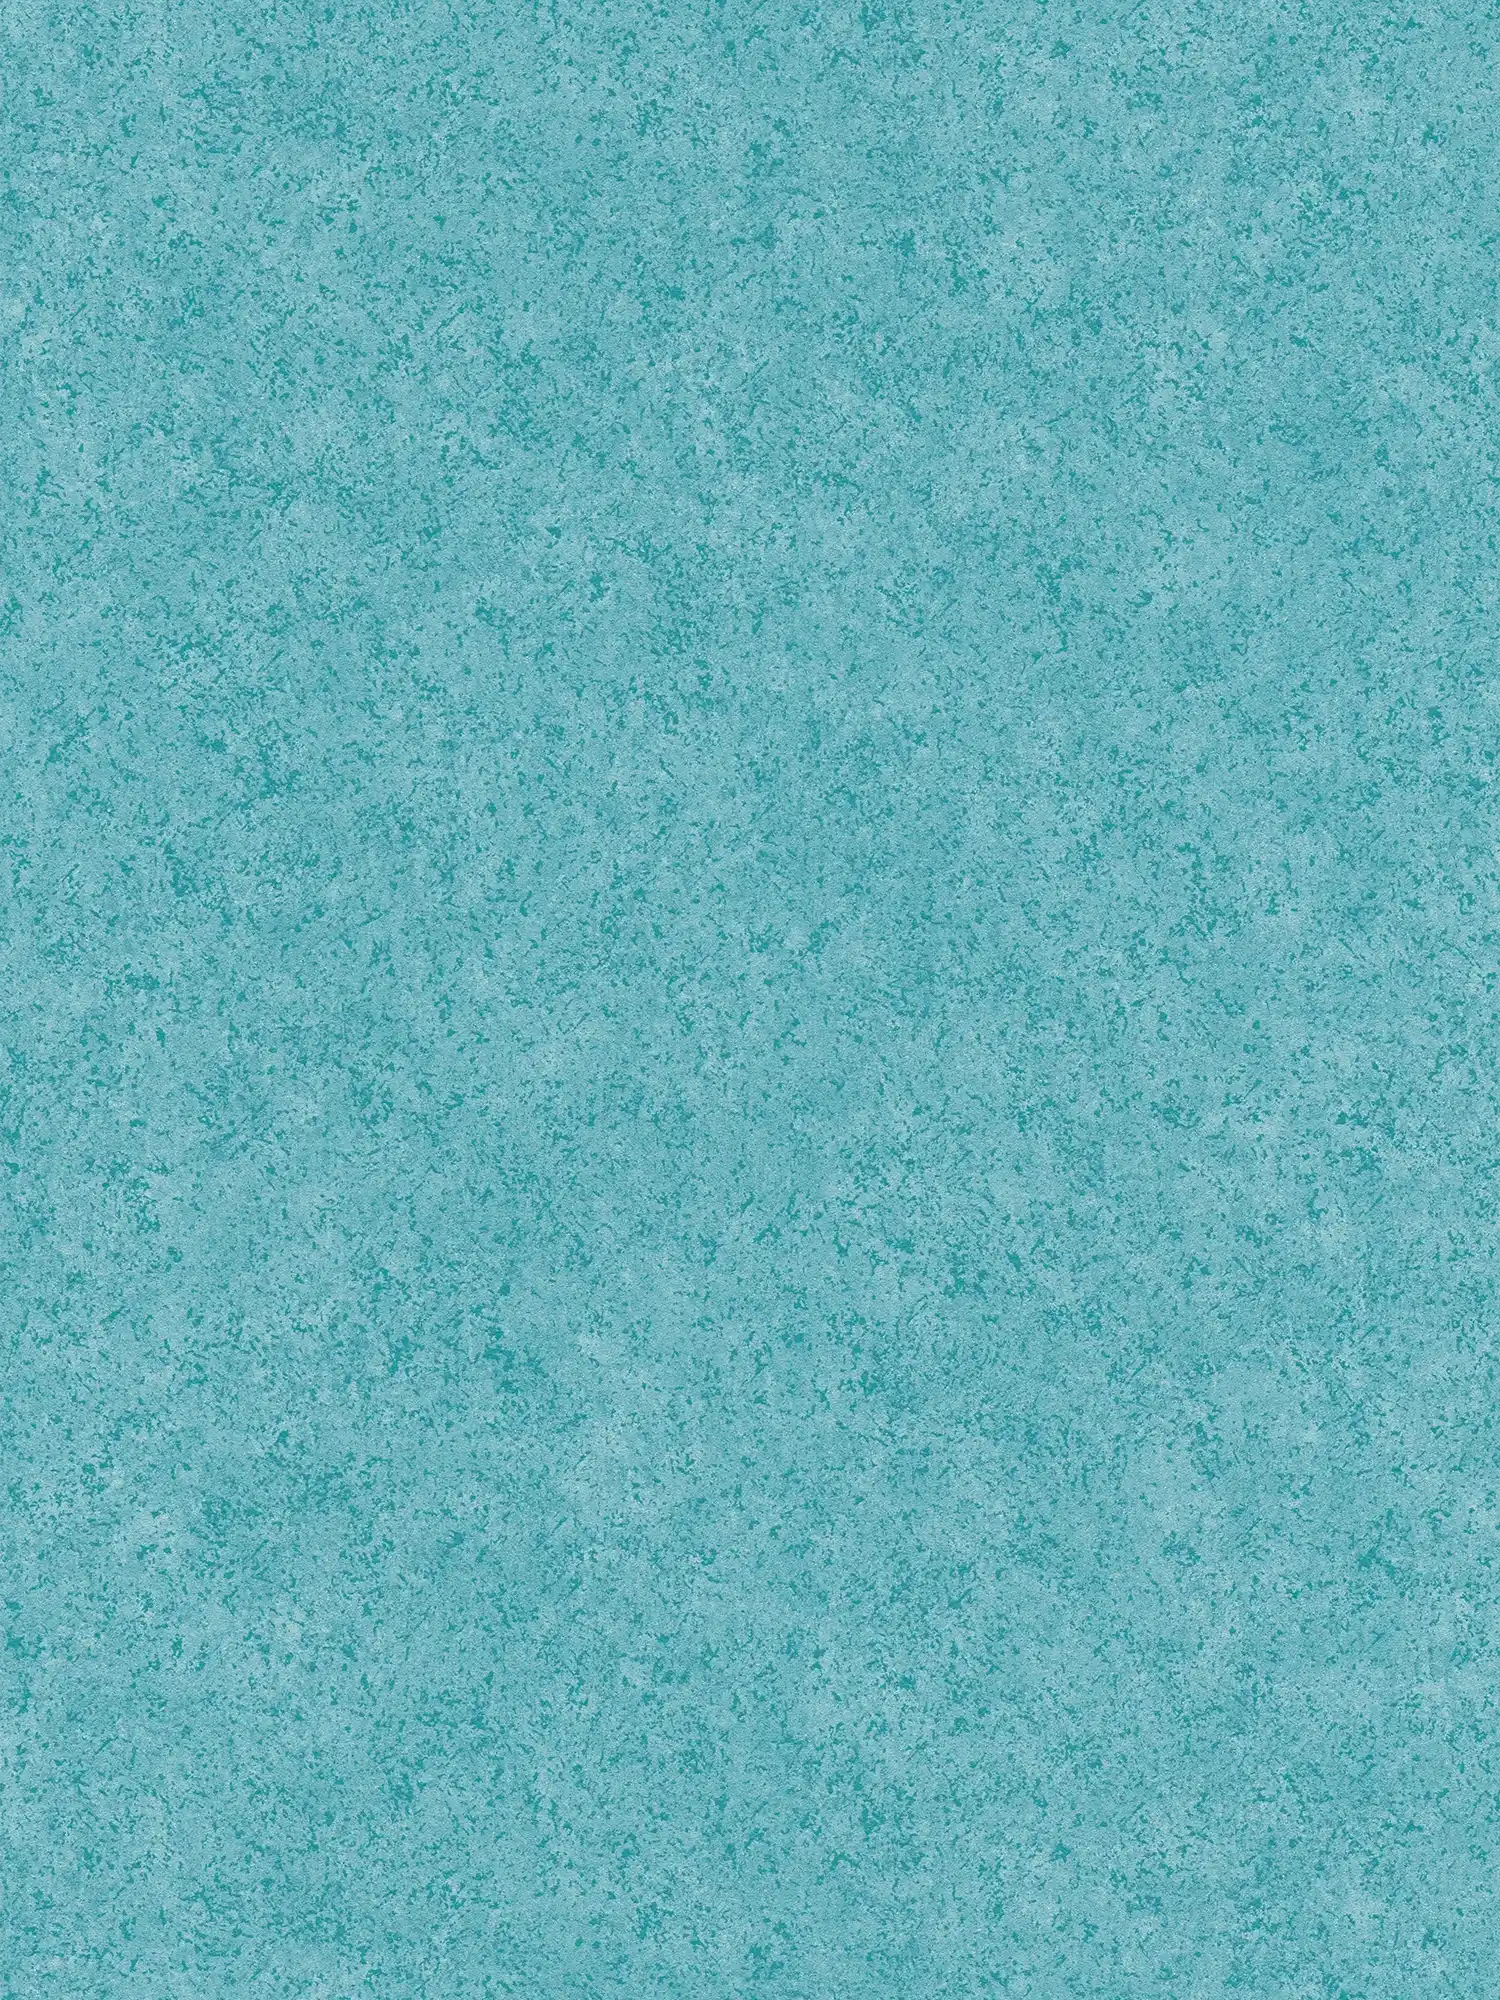 Non-woven wallpaper petrol plaster look with matte pattern - blue, green
